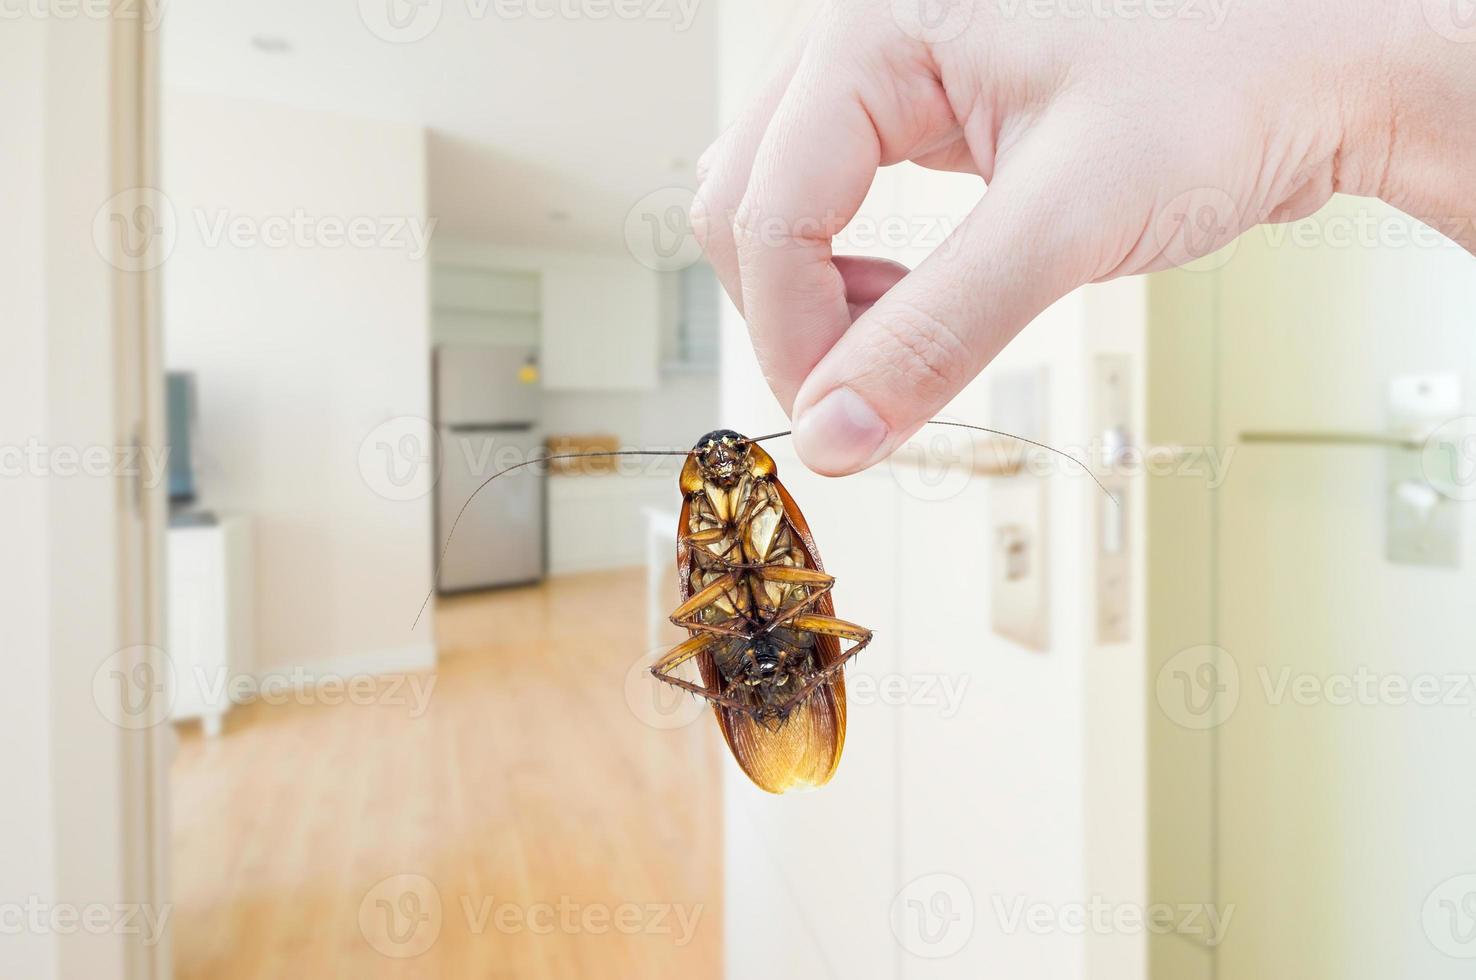 kvinnas hand innehav kackerlacka på rum i hus bakgrund, eliminera kackerlacka i rum hus foto